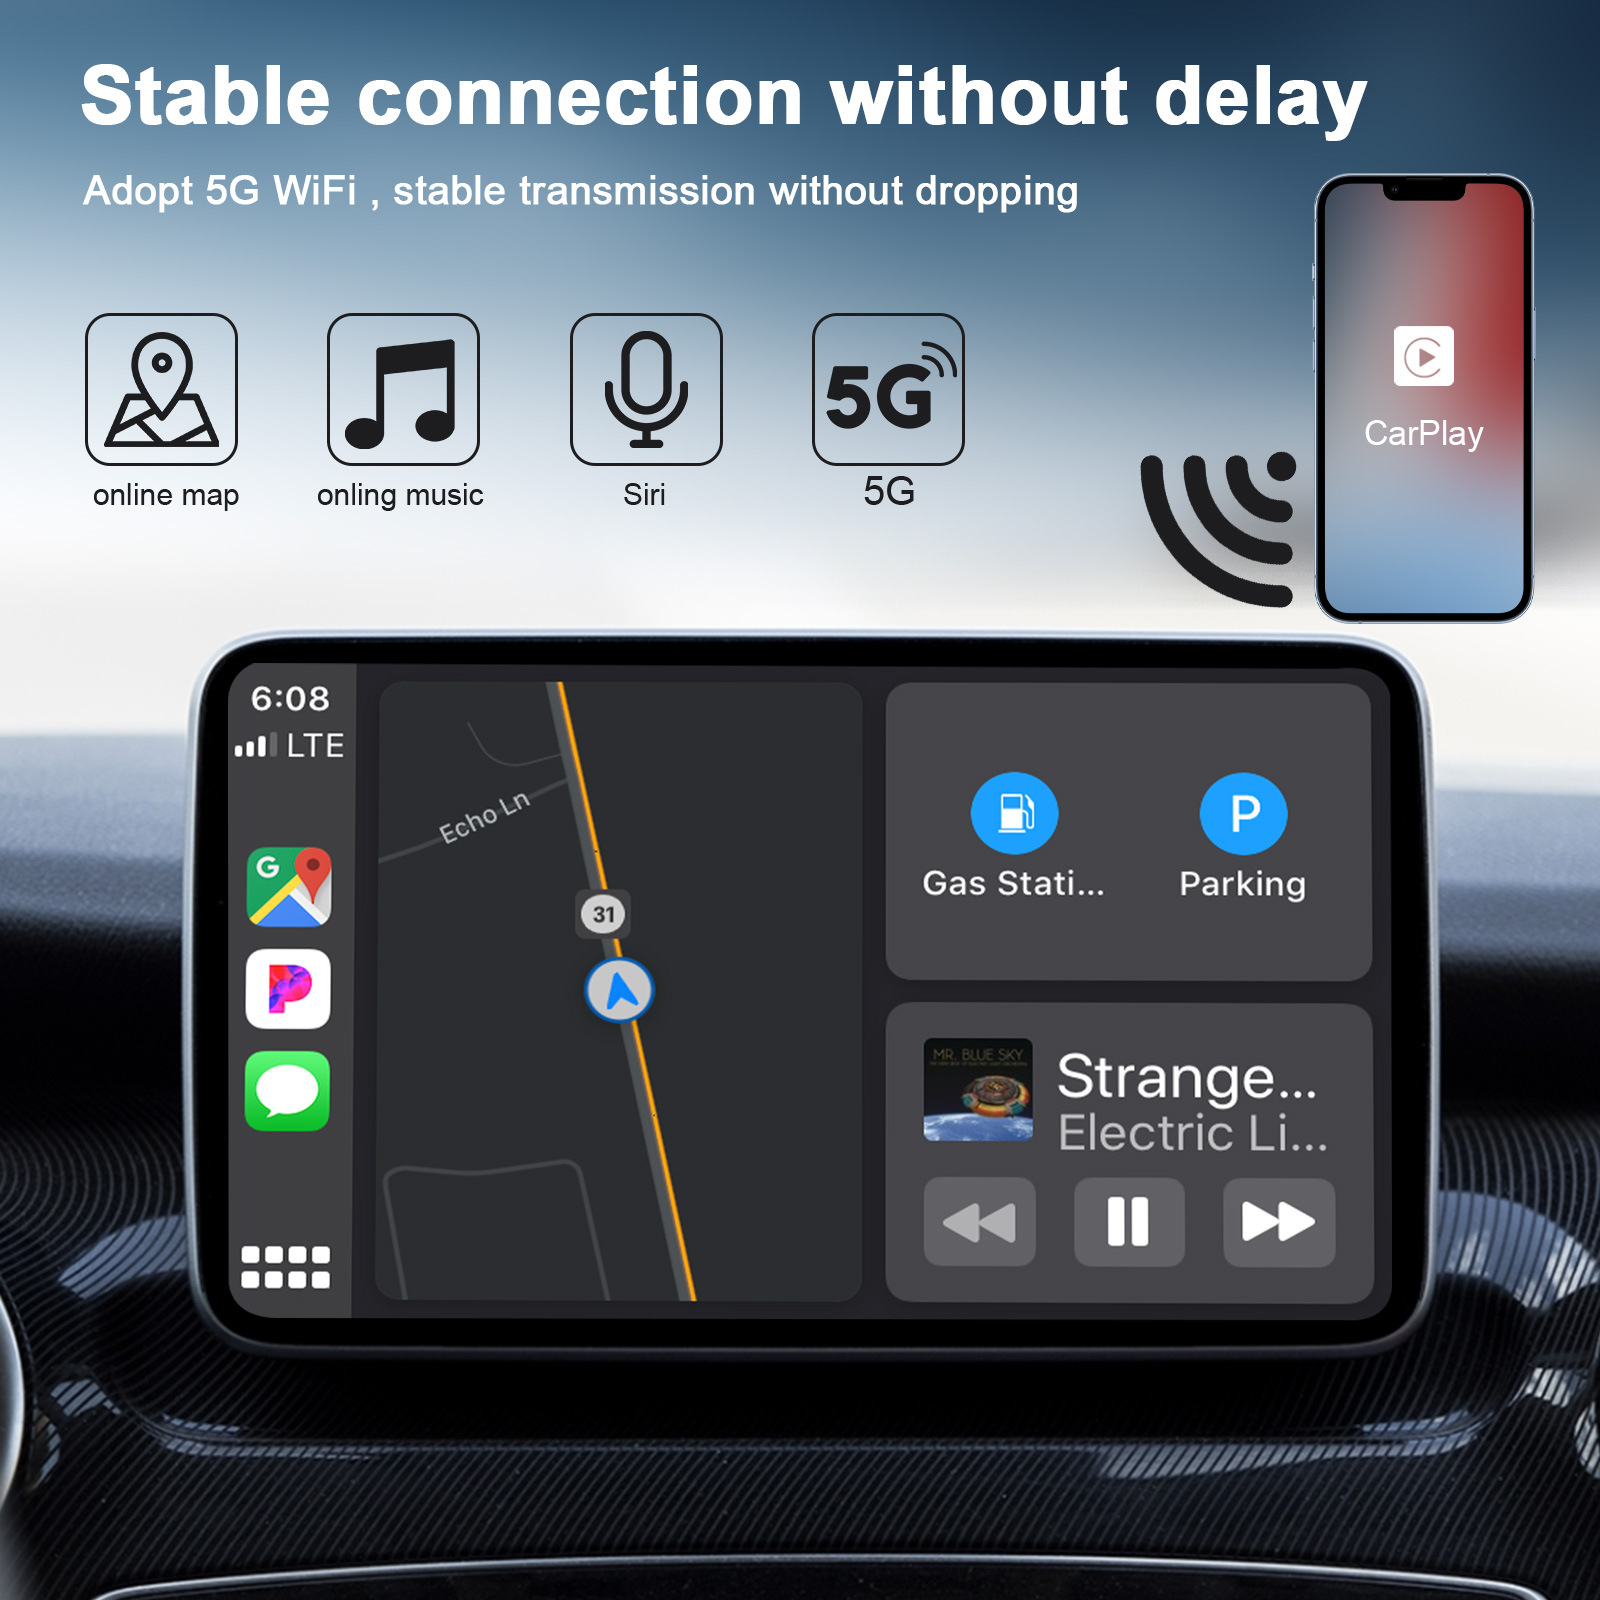 Bezprzewodowe adapter Carplay kompatybilny z telefonami Apple Upgrade Plug Play Play Play Ored